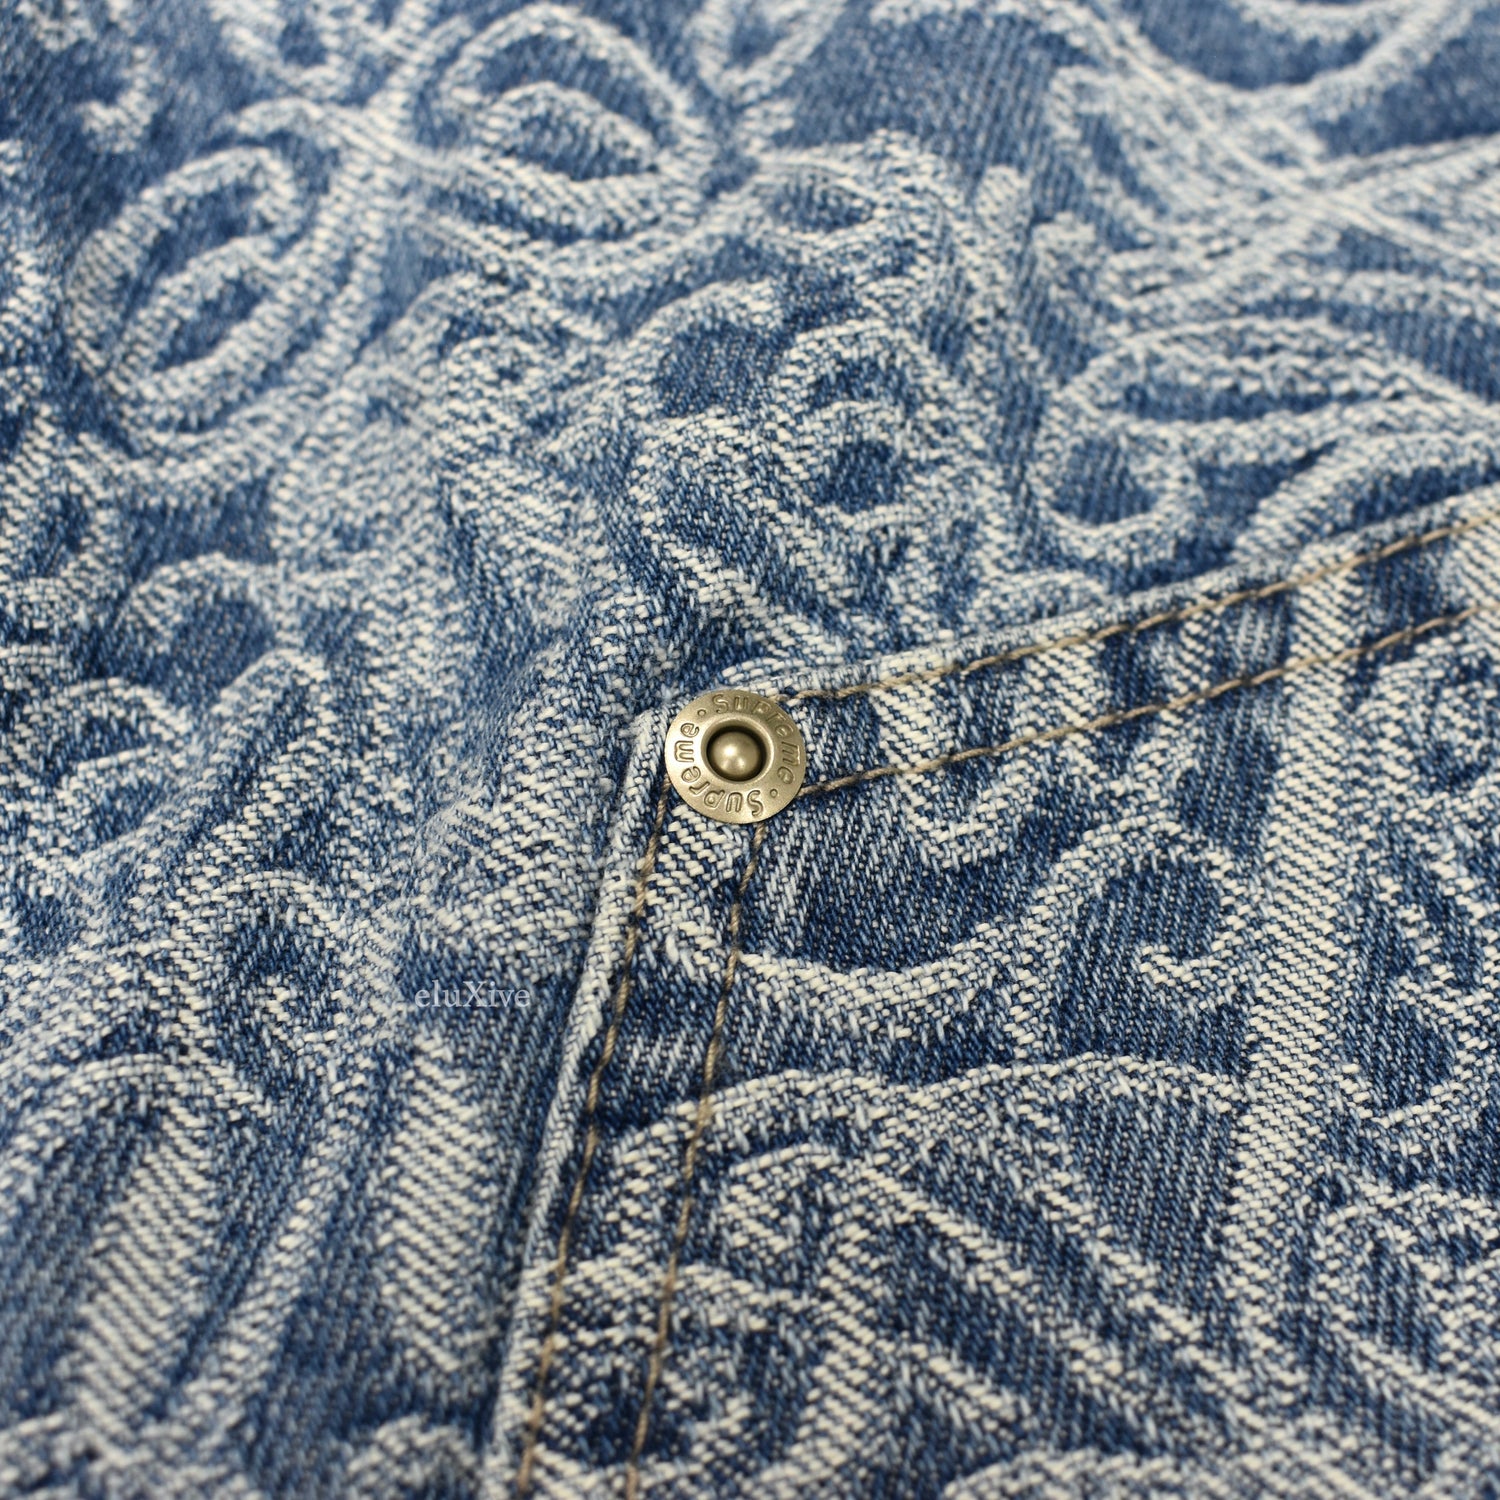 Supreme - Multi Type Jacquard Logo Denim Jeans (Blue) – eluXive